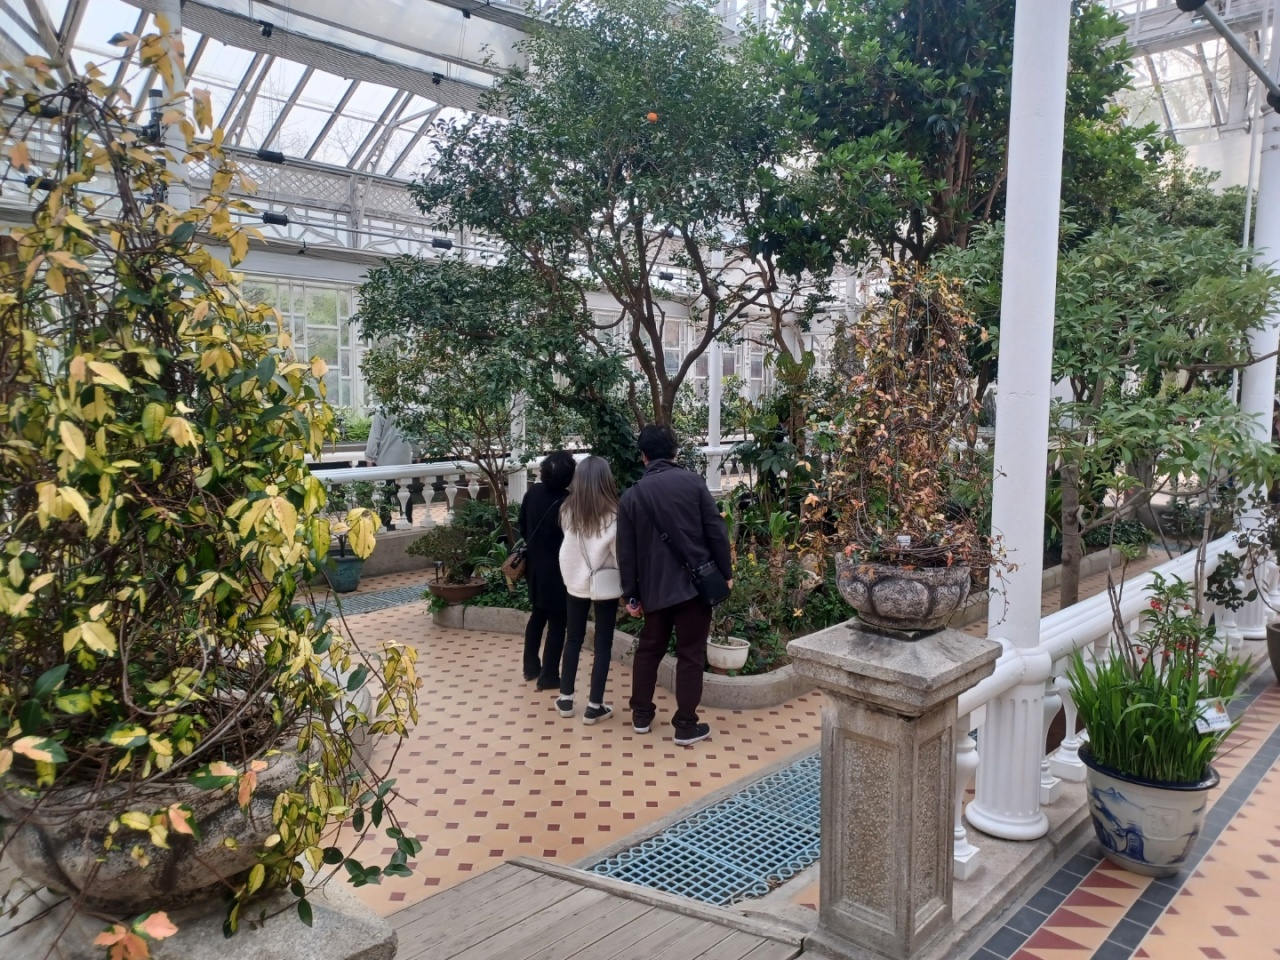 Visitors look at citrus junos plants at the Grand Greenhouse (Lee Si-jin/The Korea Herald)